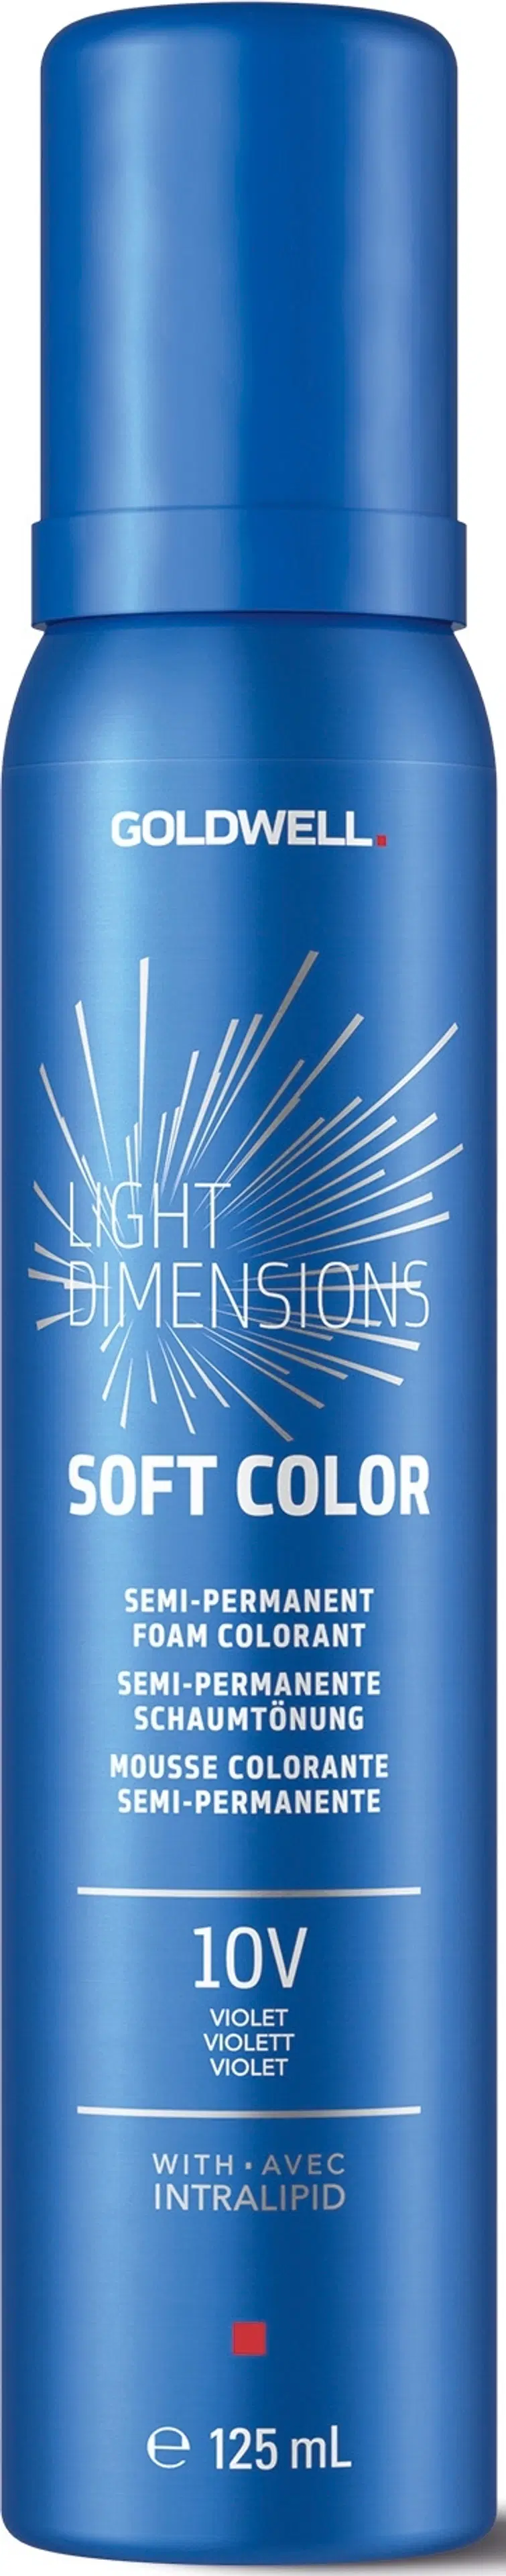 Goldwell Light Dimensions Soft Color 10V sävytysvaahto 125 ml